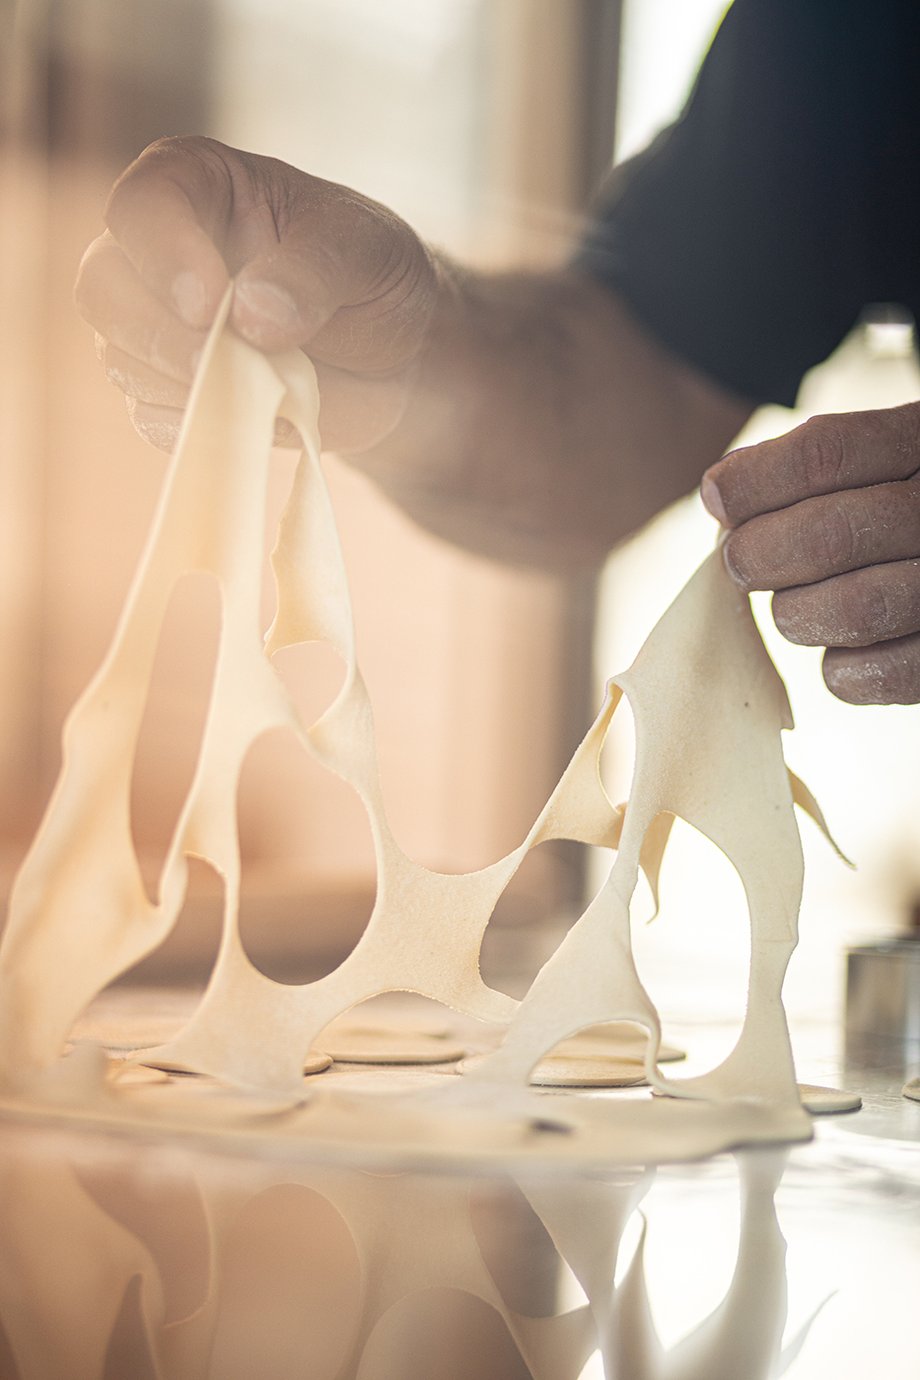 Making pasta workshop Manfredi Tedde shot by Alberto Bernasconi for Enjoy magazine